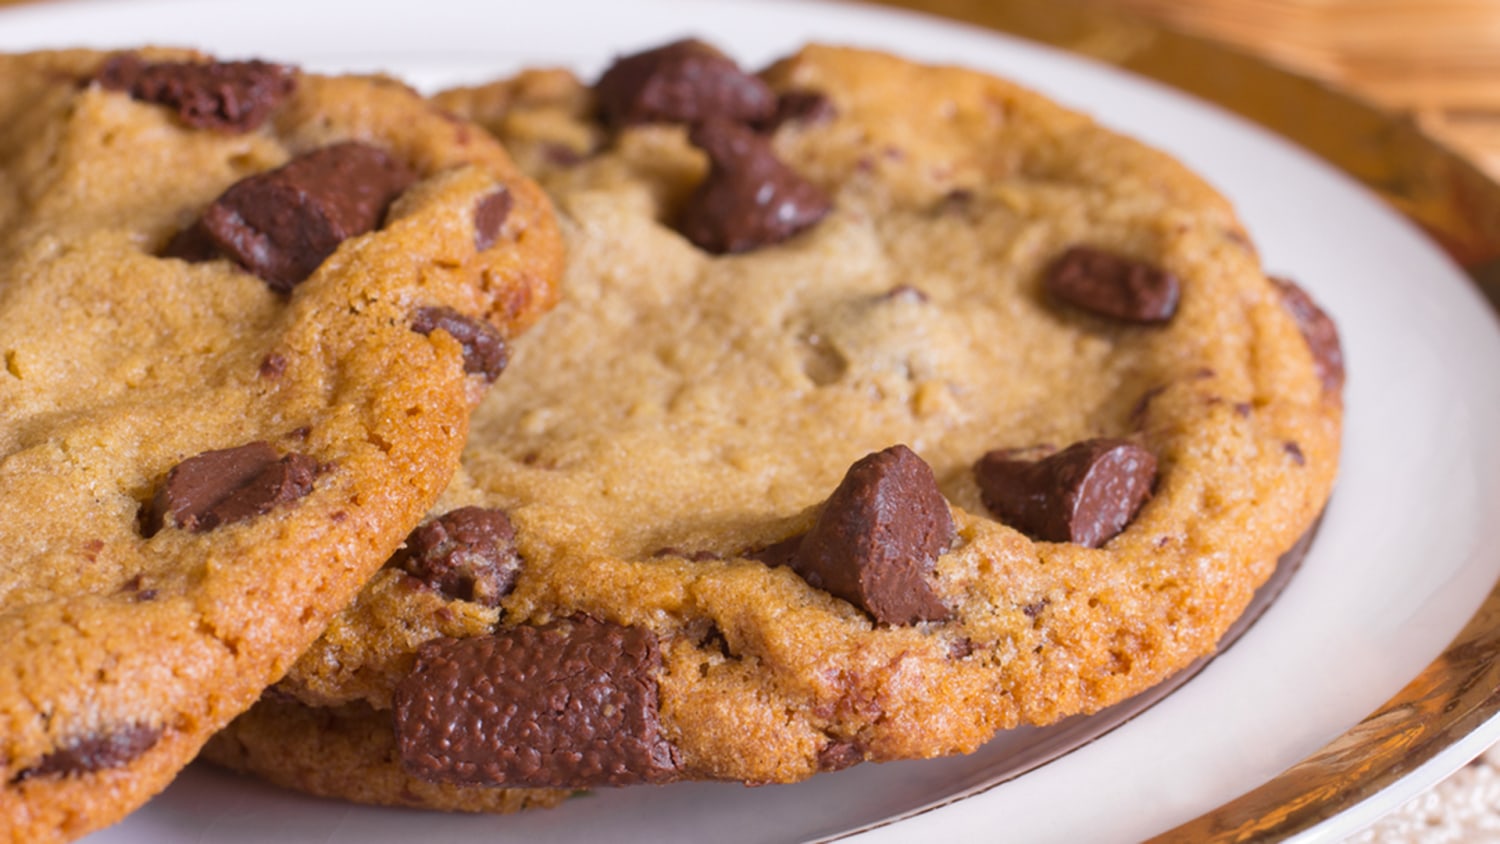 Flycatcher Inc: Happy National Cookie Day! 🍪